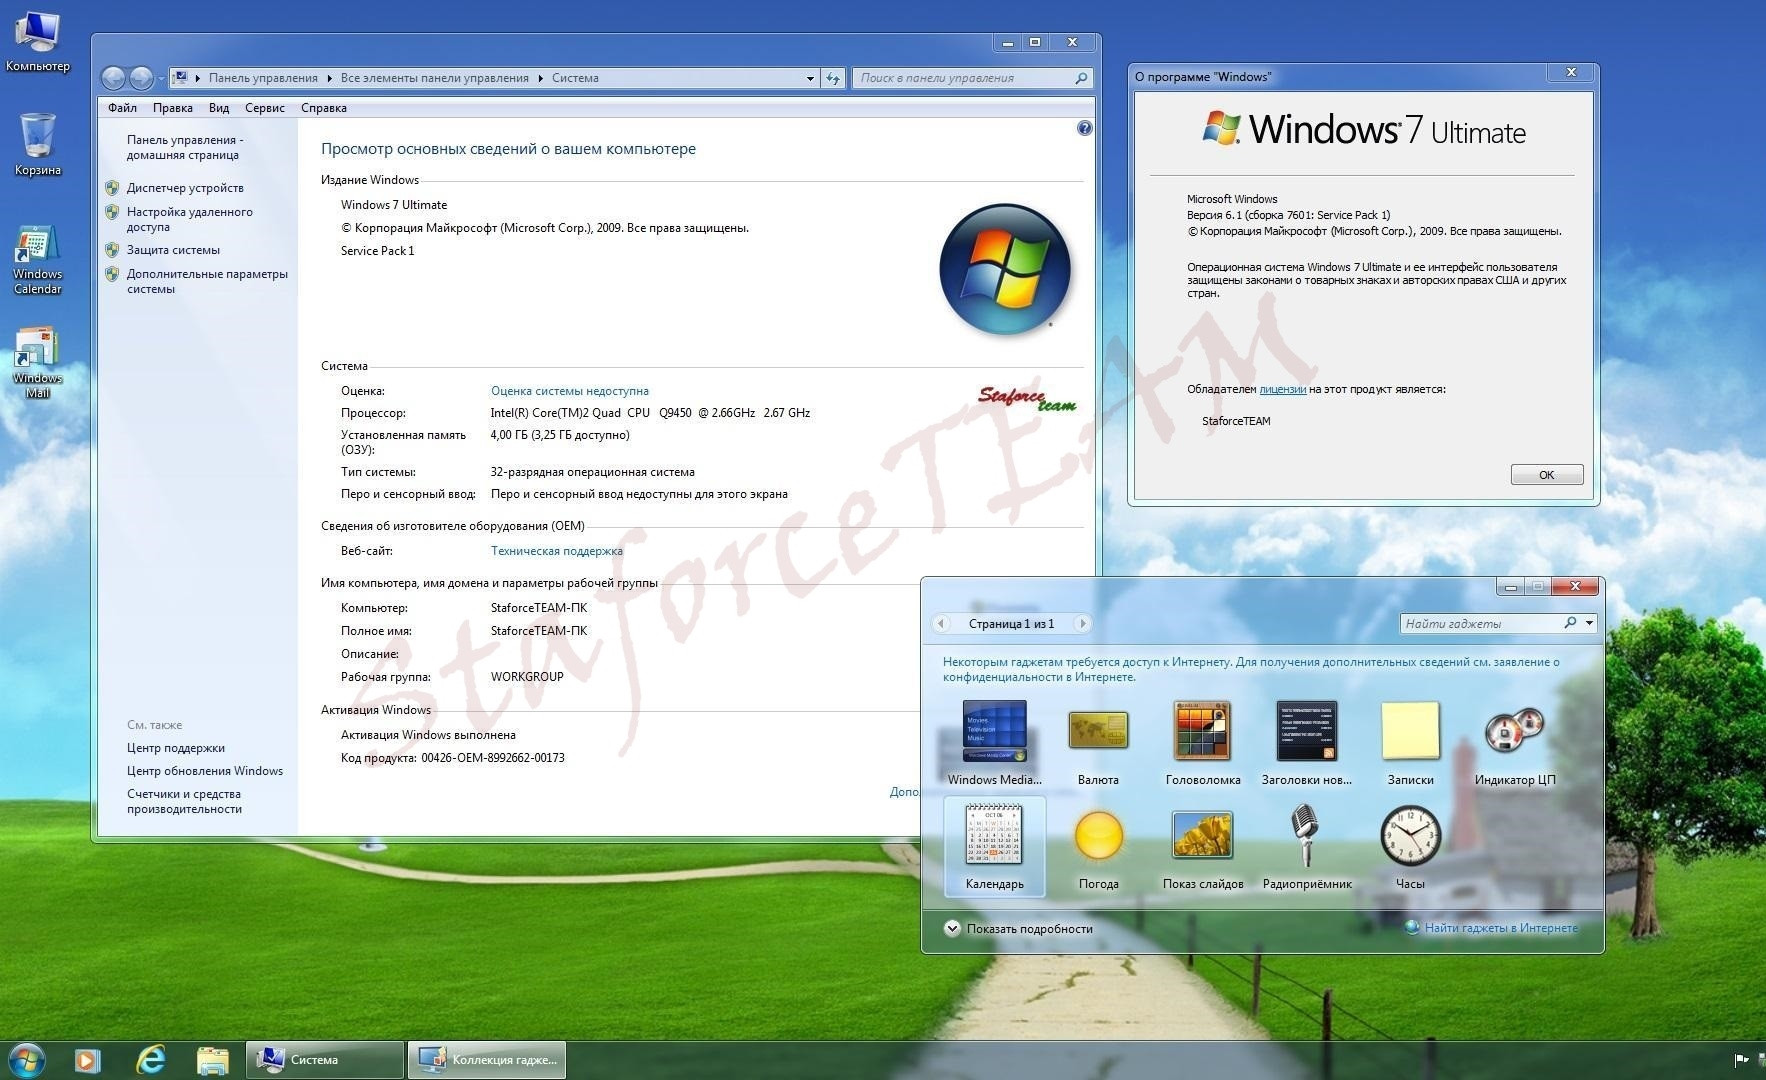 Windows 7 SP1 Ultimate (32bit) Preacivated by SF TEAM [DE-EN-RU] April 2014 =-TEAM OS=-{HKRG}